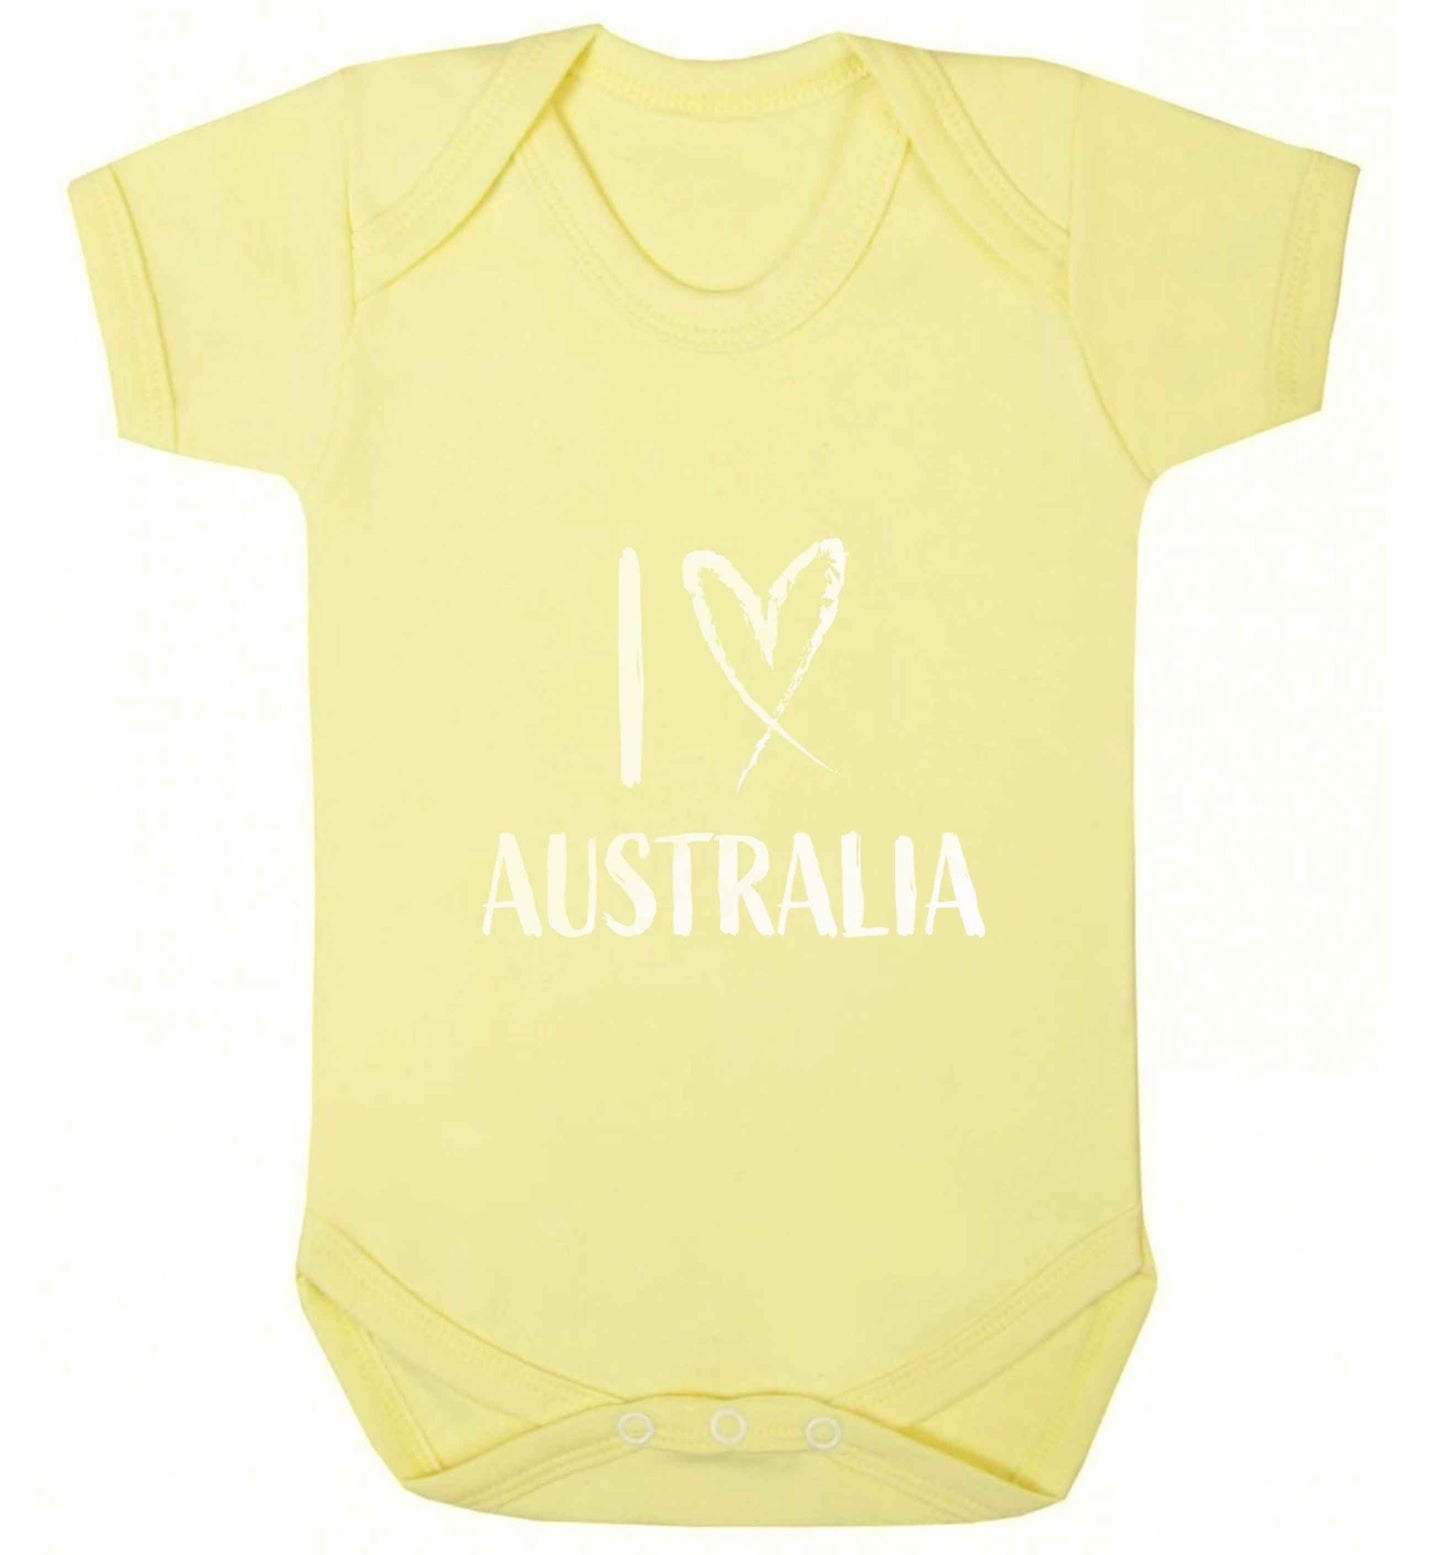 I Love Australia baby vest pale yellow 18-24 months